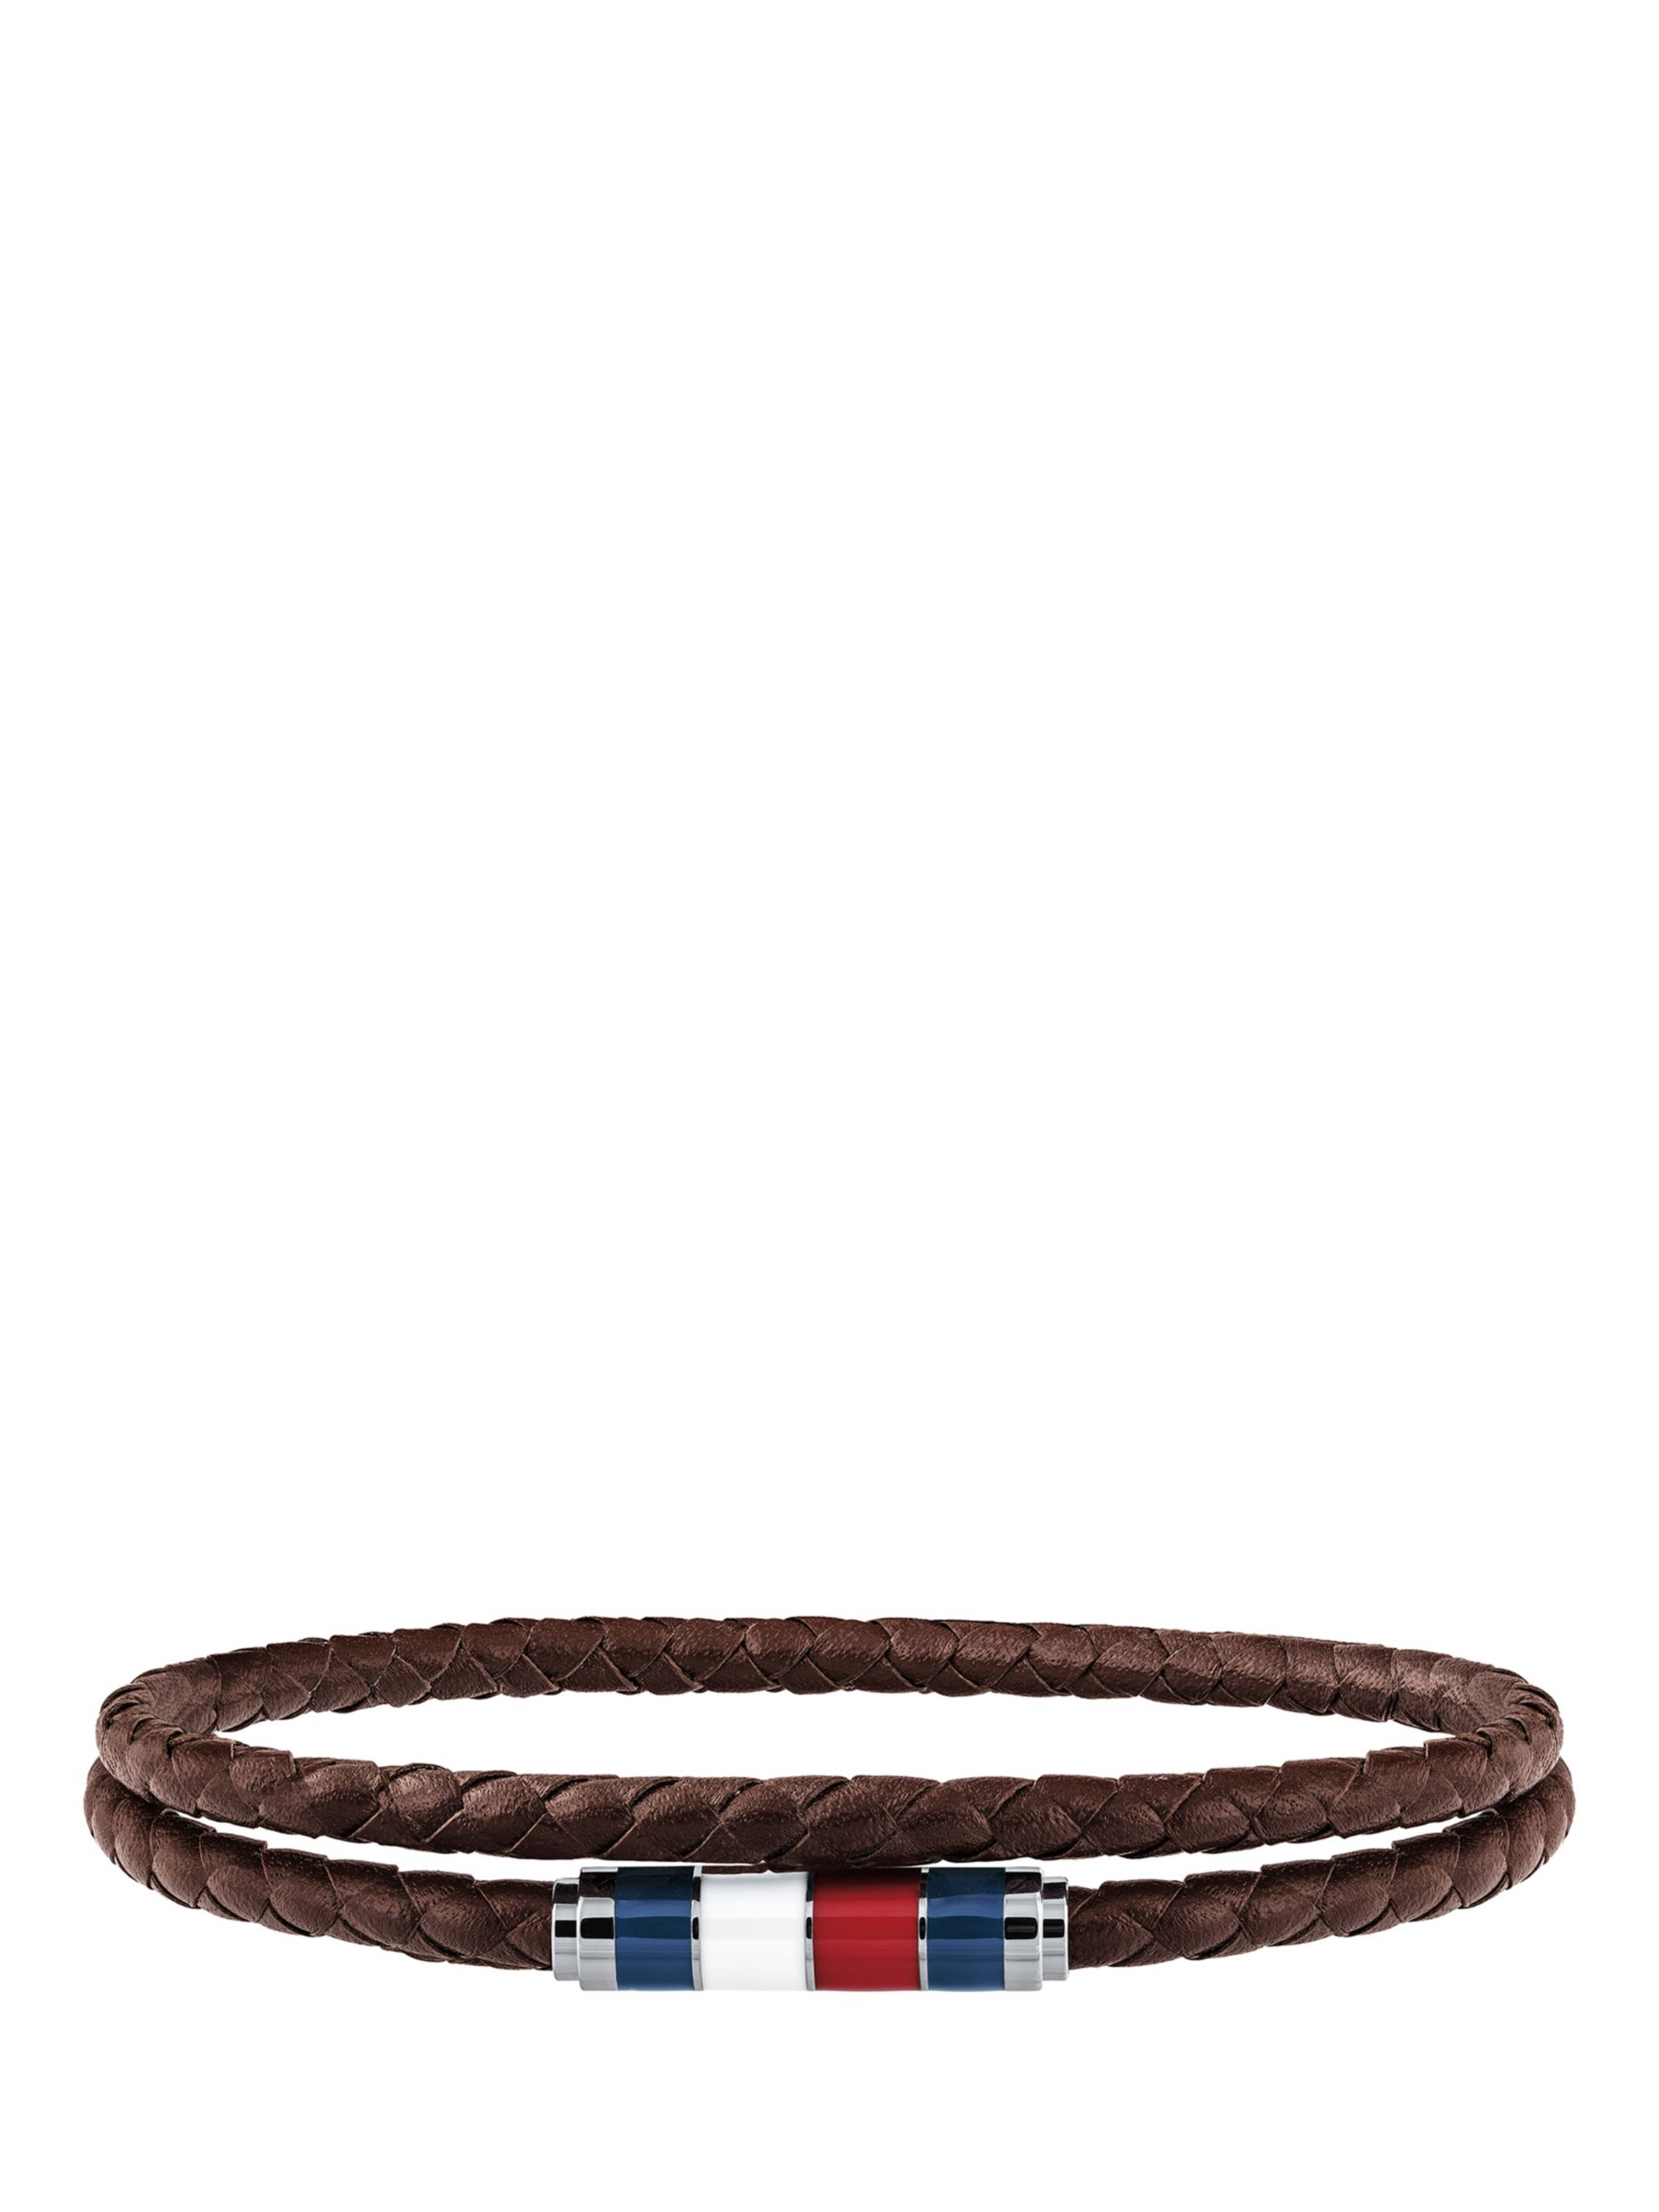 Tommy Hilfiger Men's Double Leather Bracelet, Silver/Brown